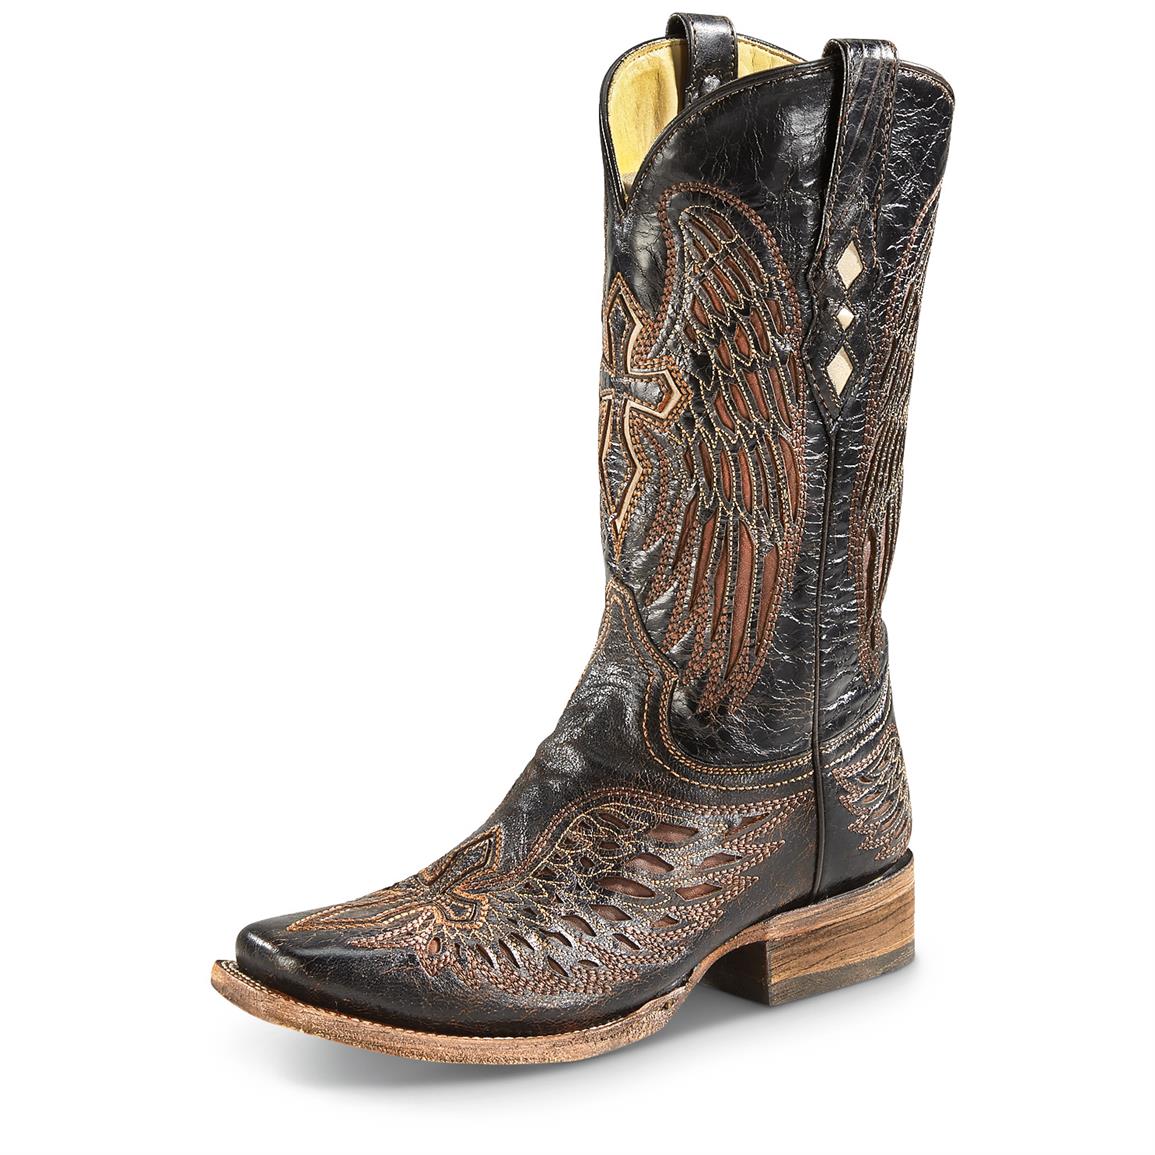 Corral Men's Winged Cross Square Toe Cowboy Boots - 655426, Cowboy